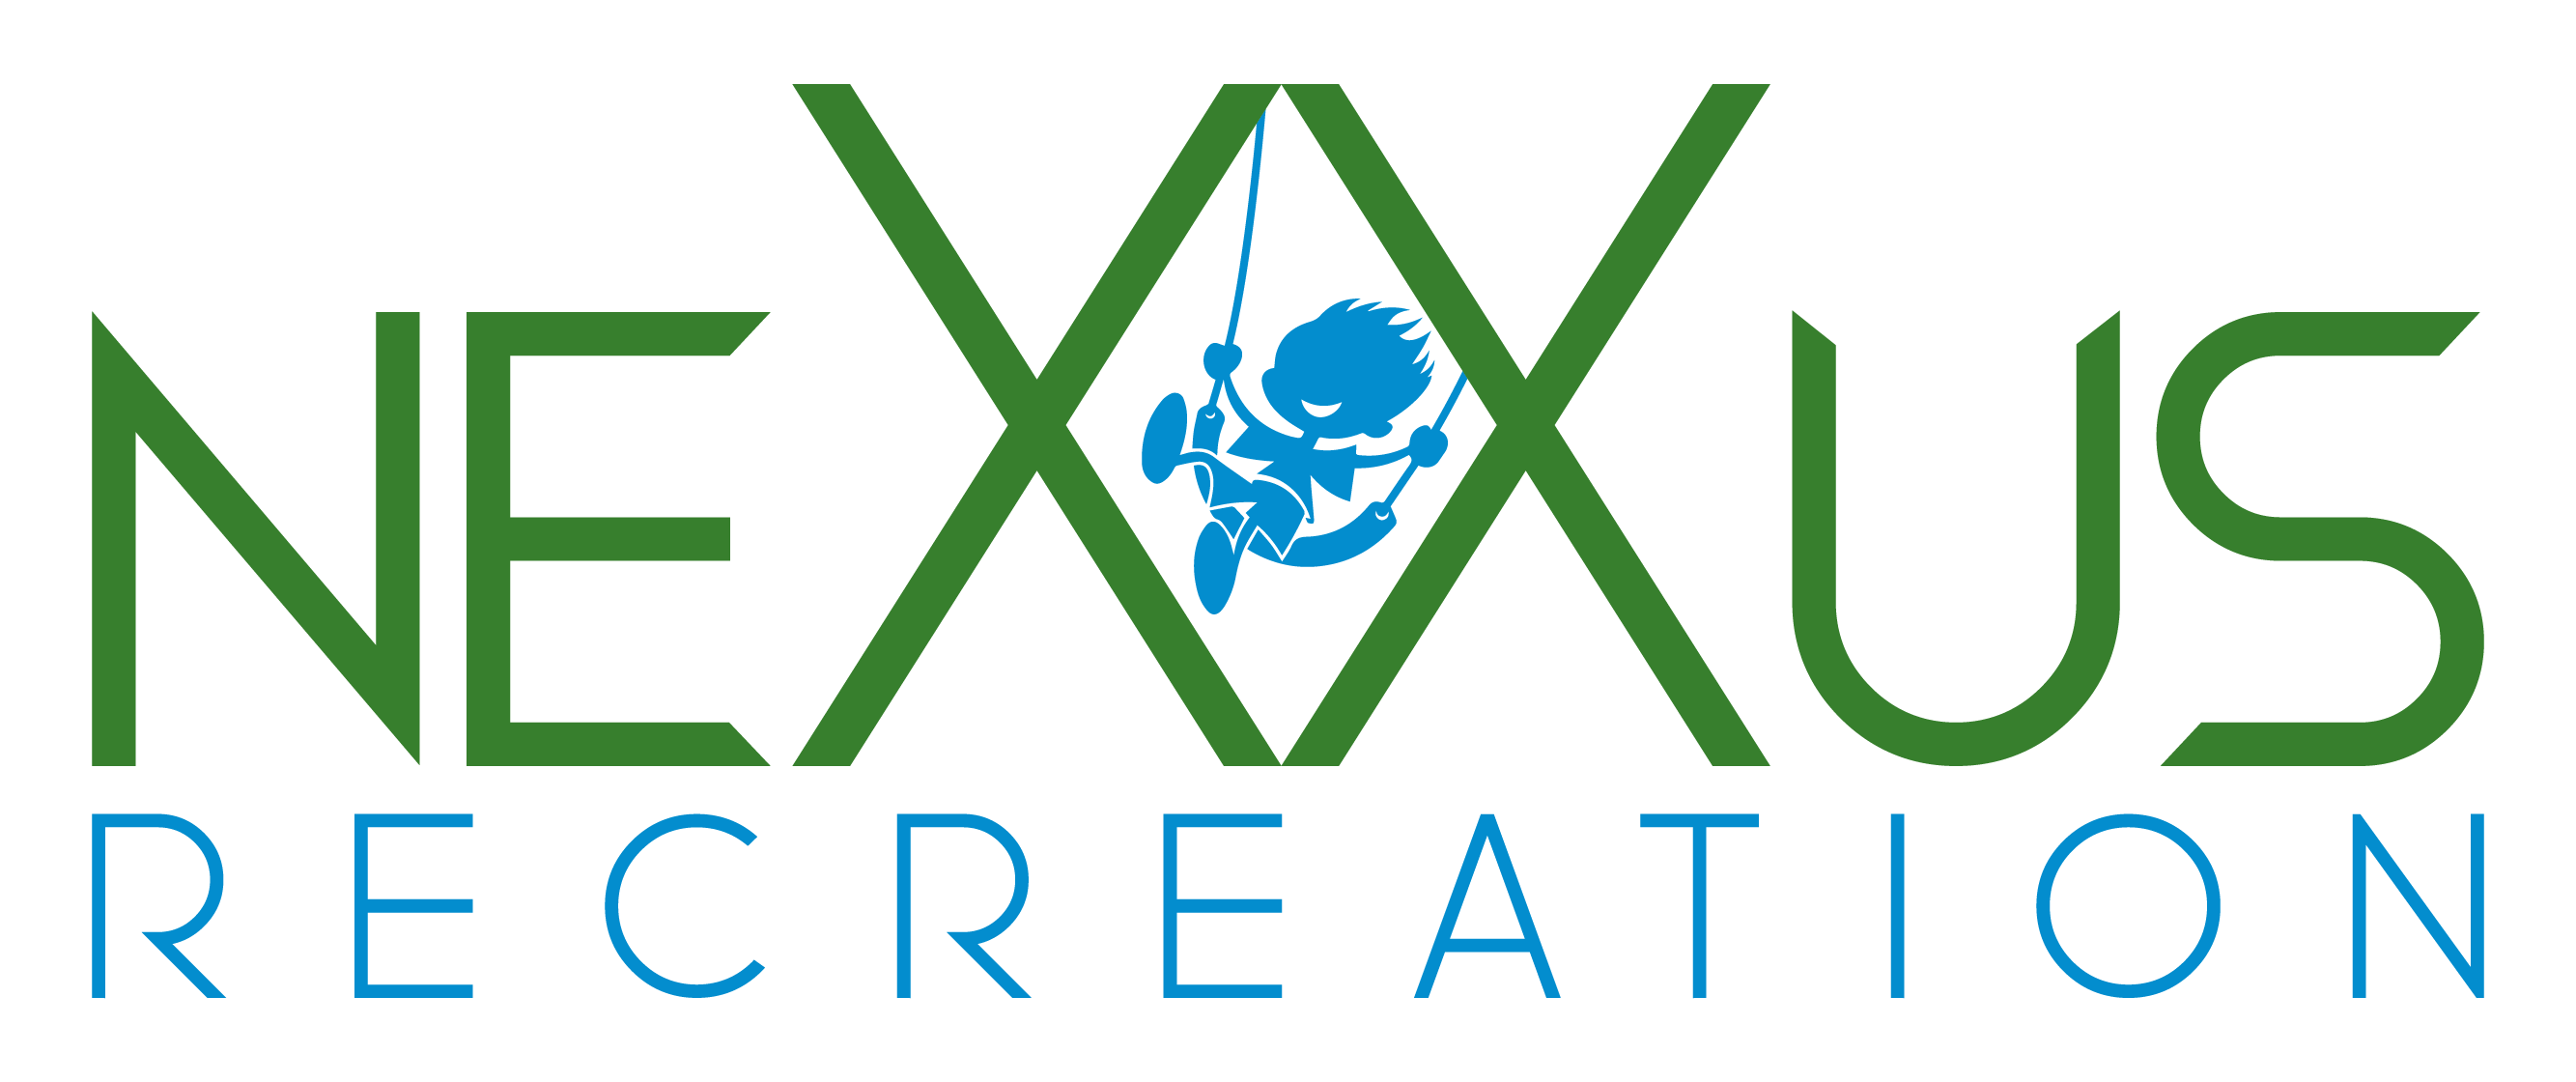 NeXXus Recreation Logo